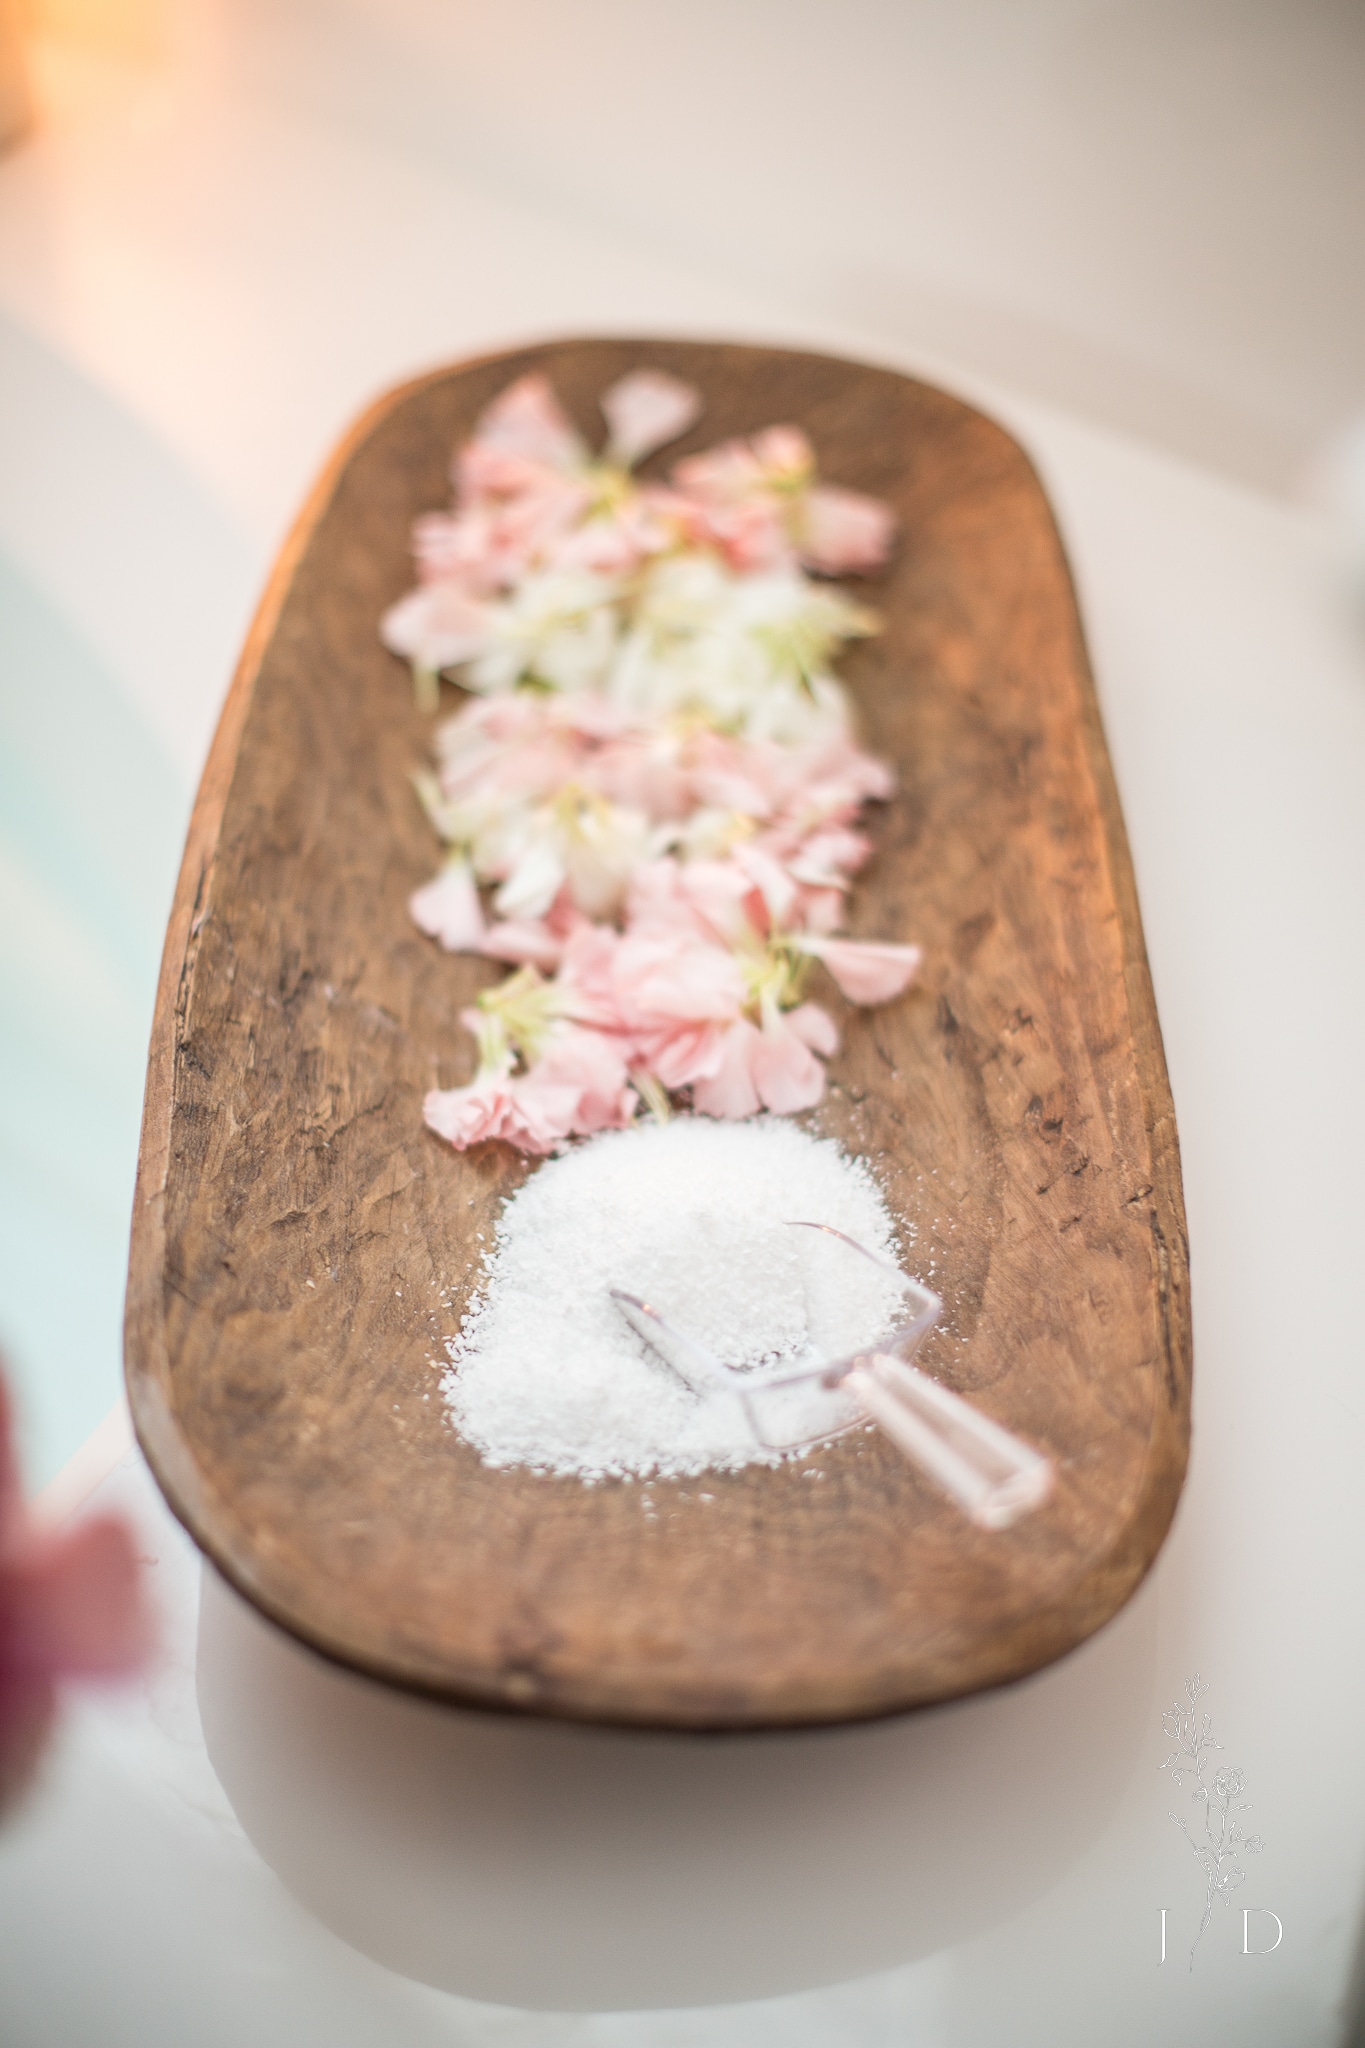 Epson salt and rose petals for a bath 